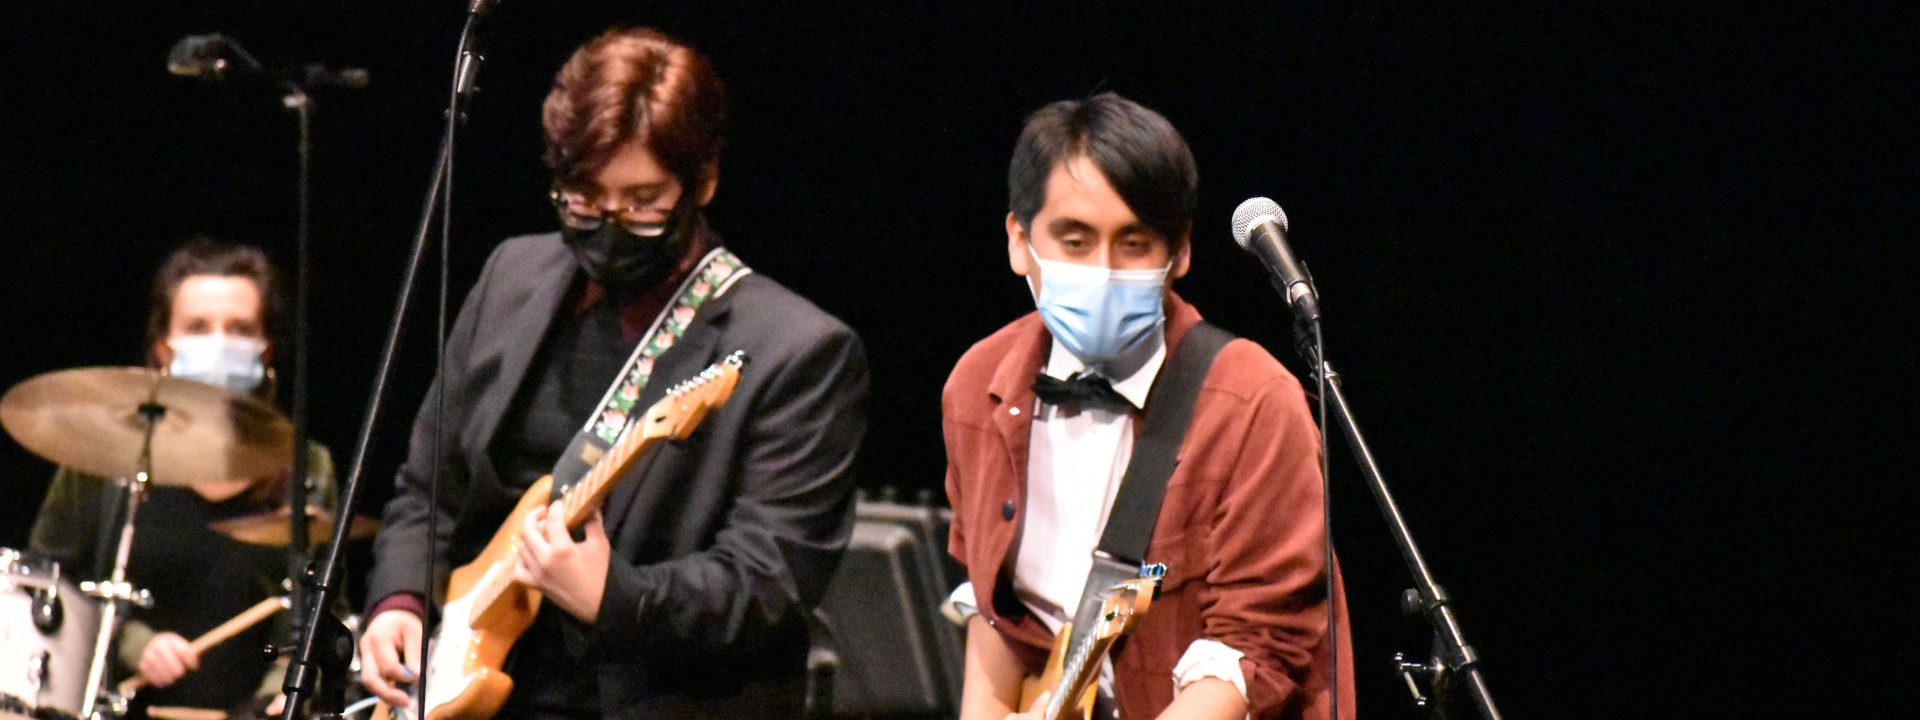 Two guitarists, commercial music ensemble